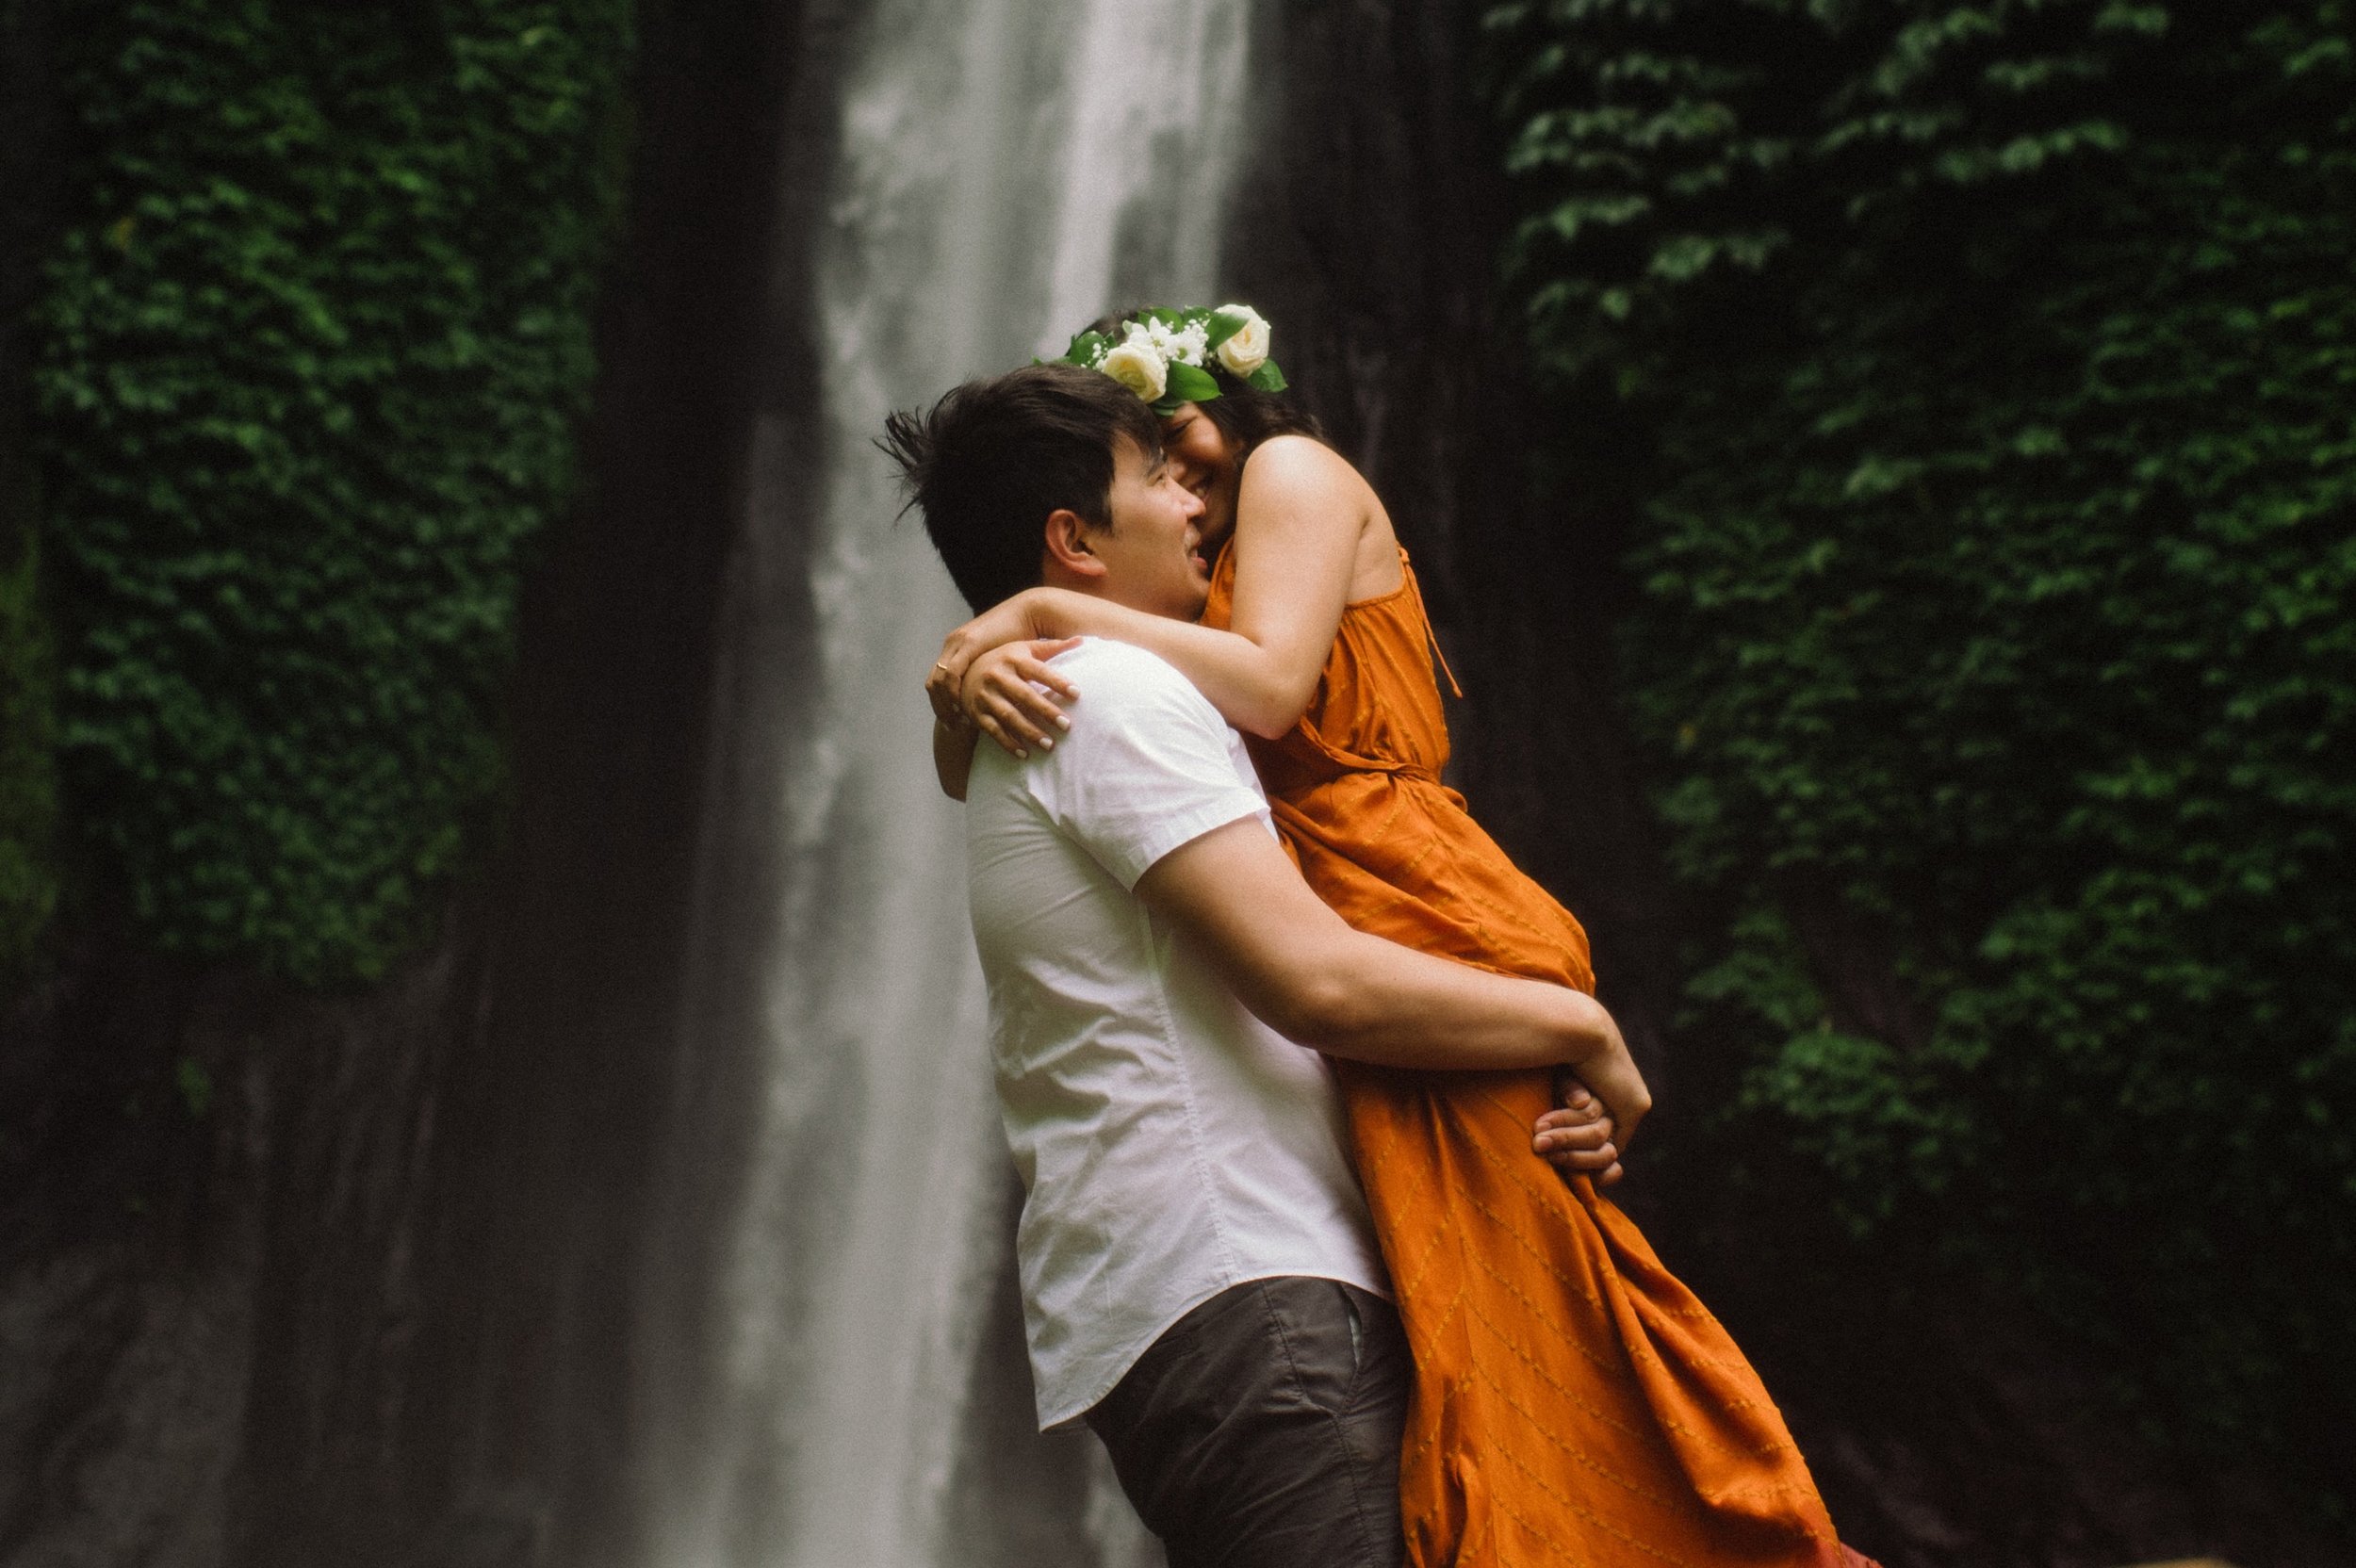 Ubud-Bali-waterfall-honeymoon-09.jpg